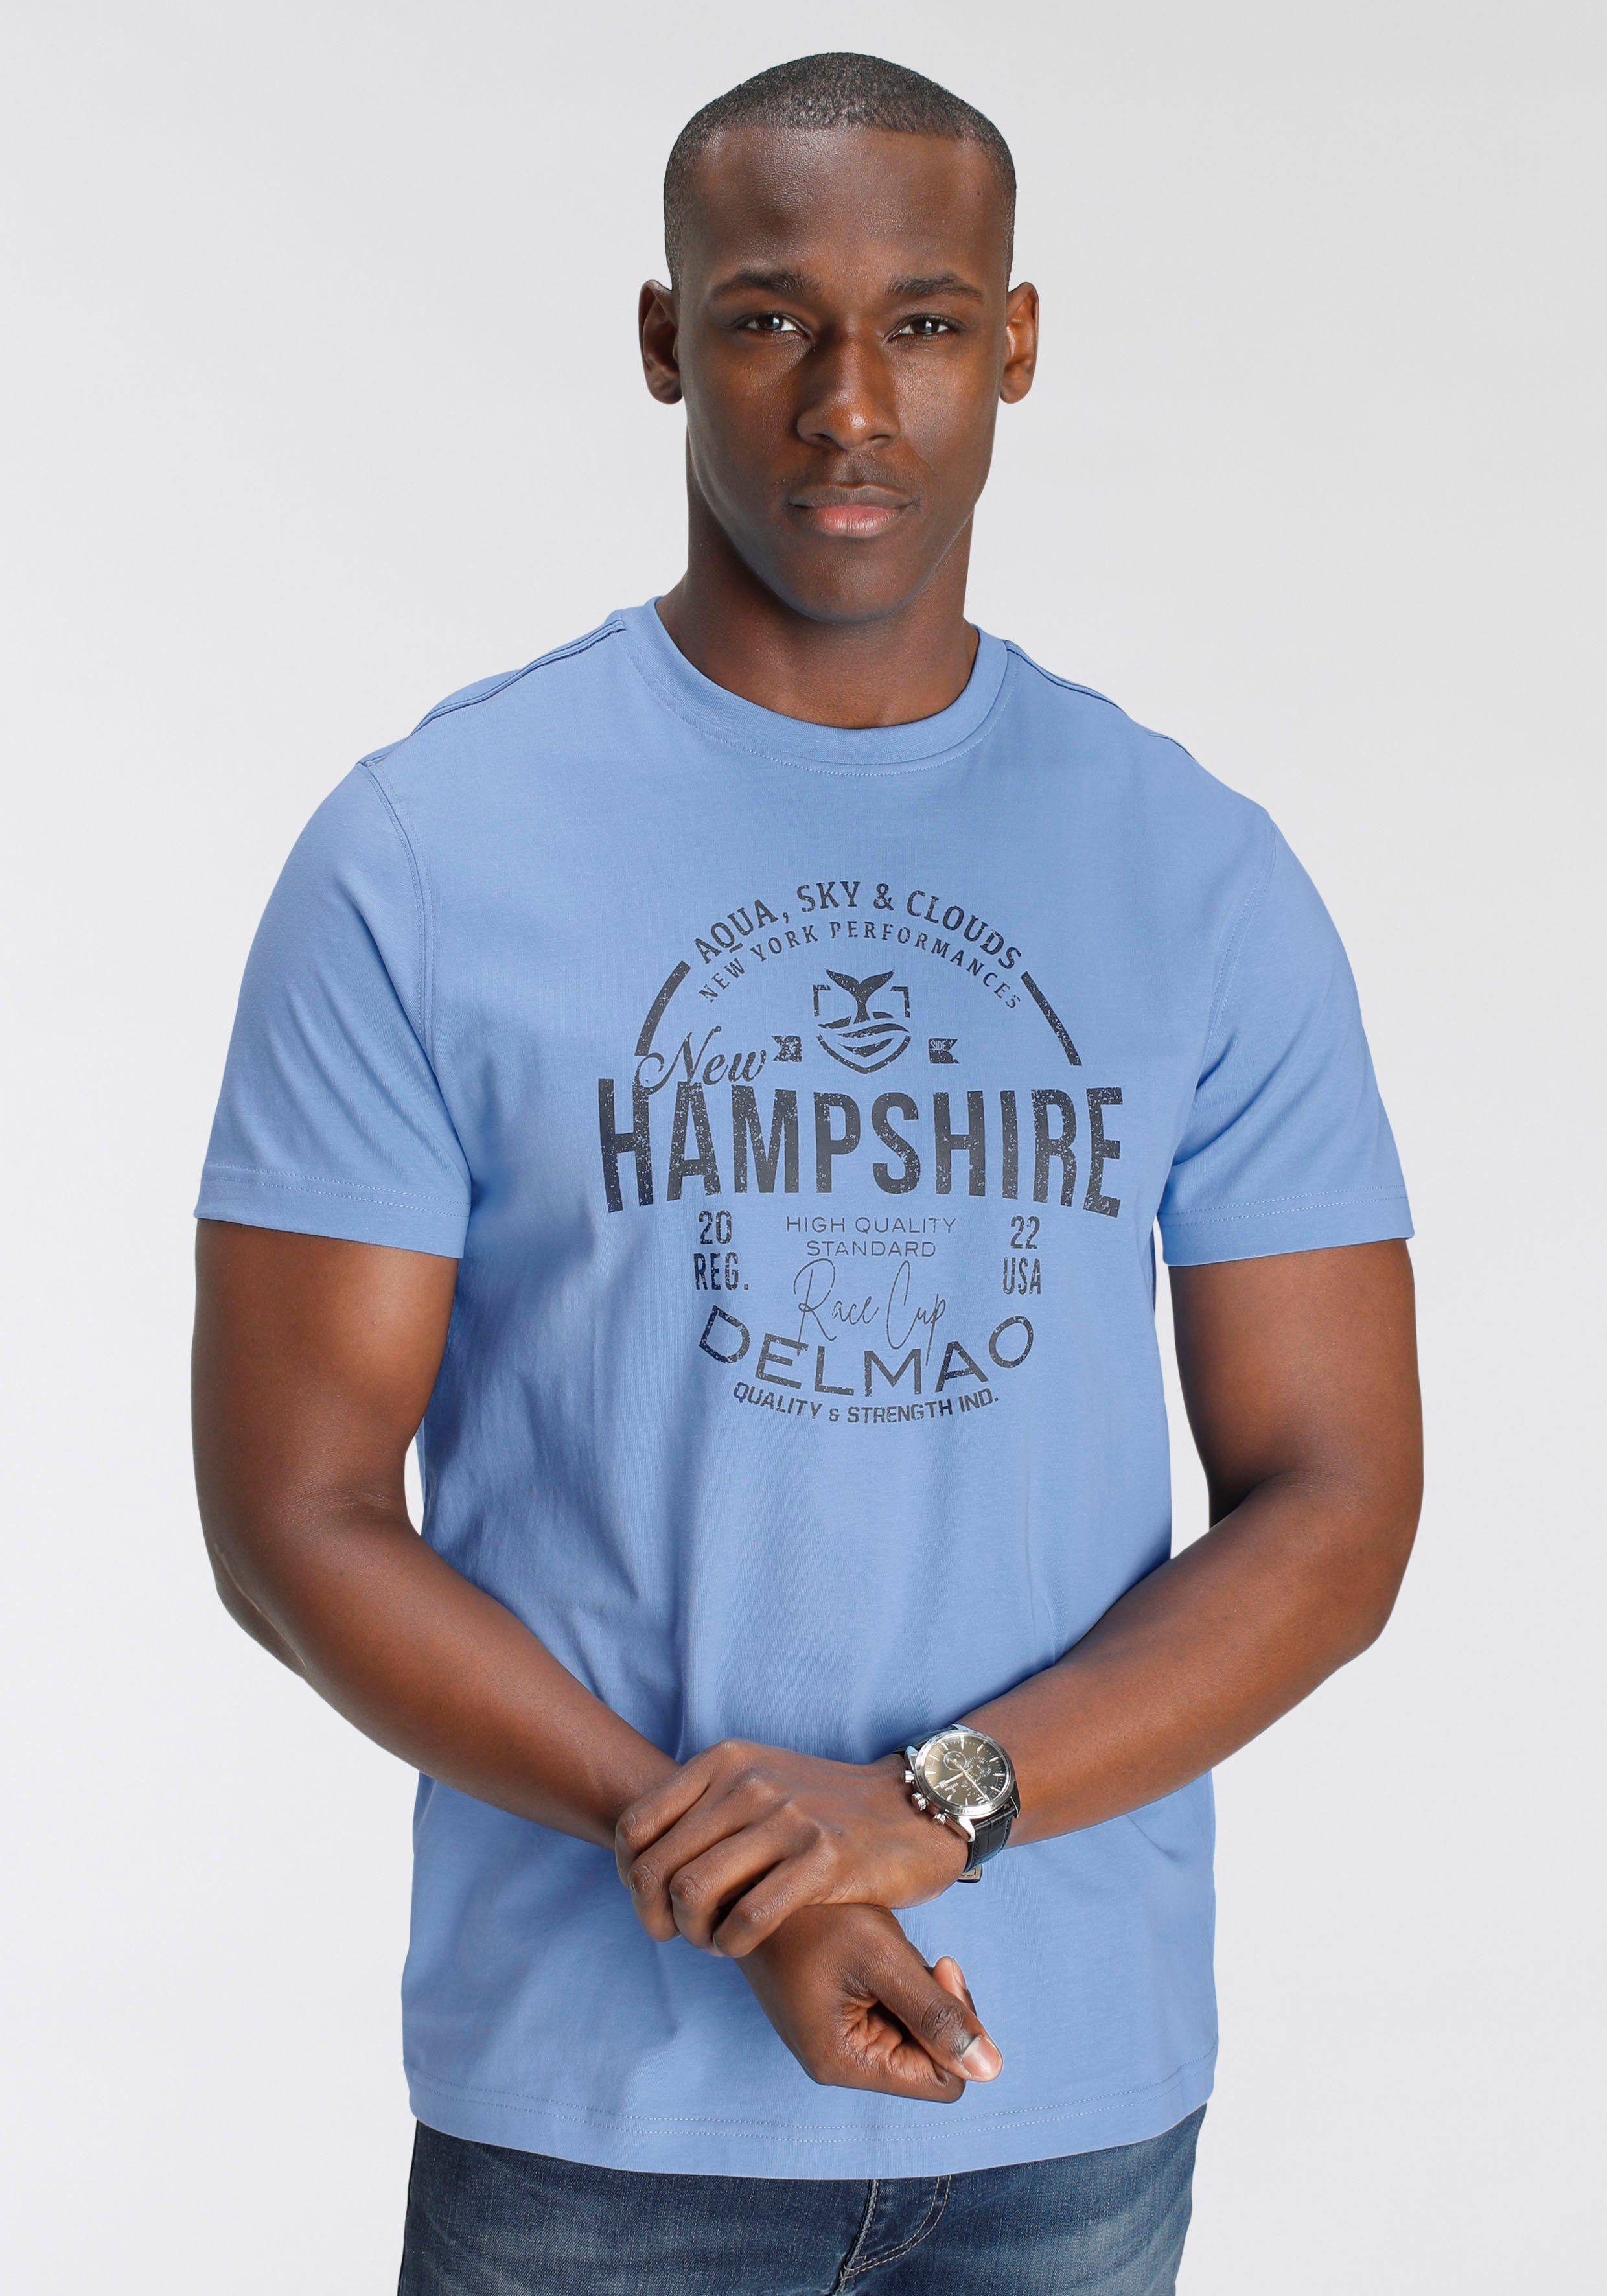 DELMAO T-Shirt mit Brustprint - NEUE hellblau MARKE